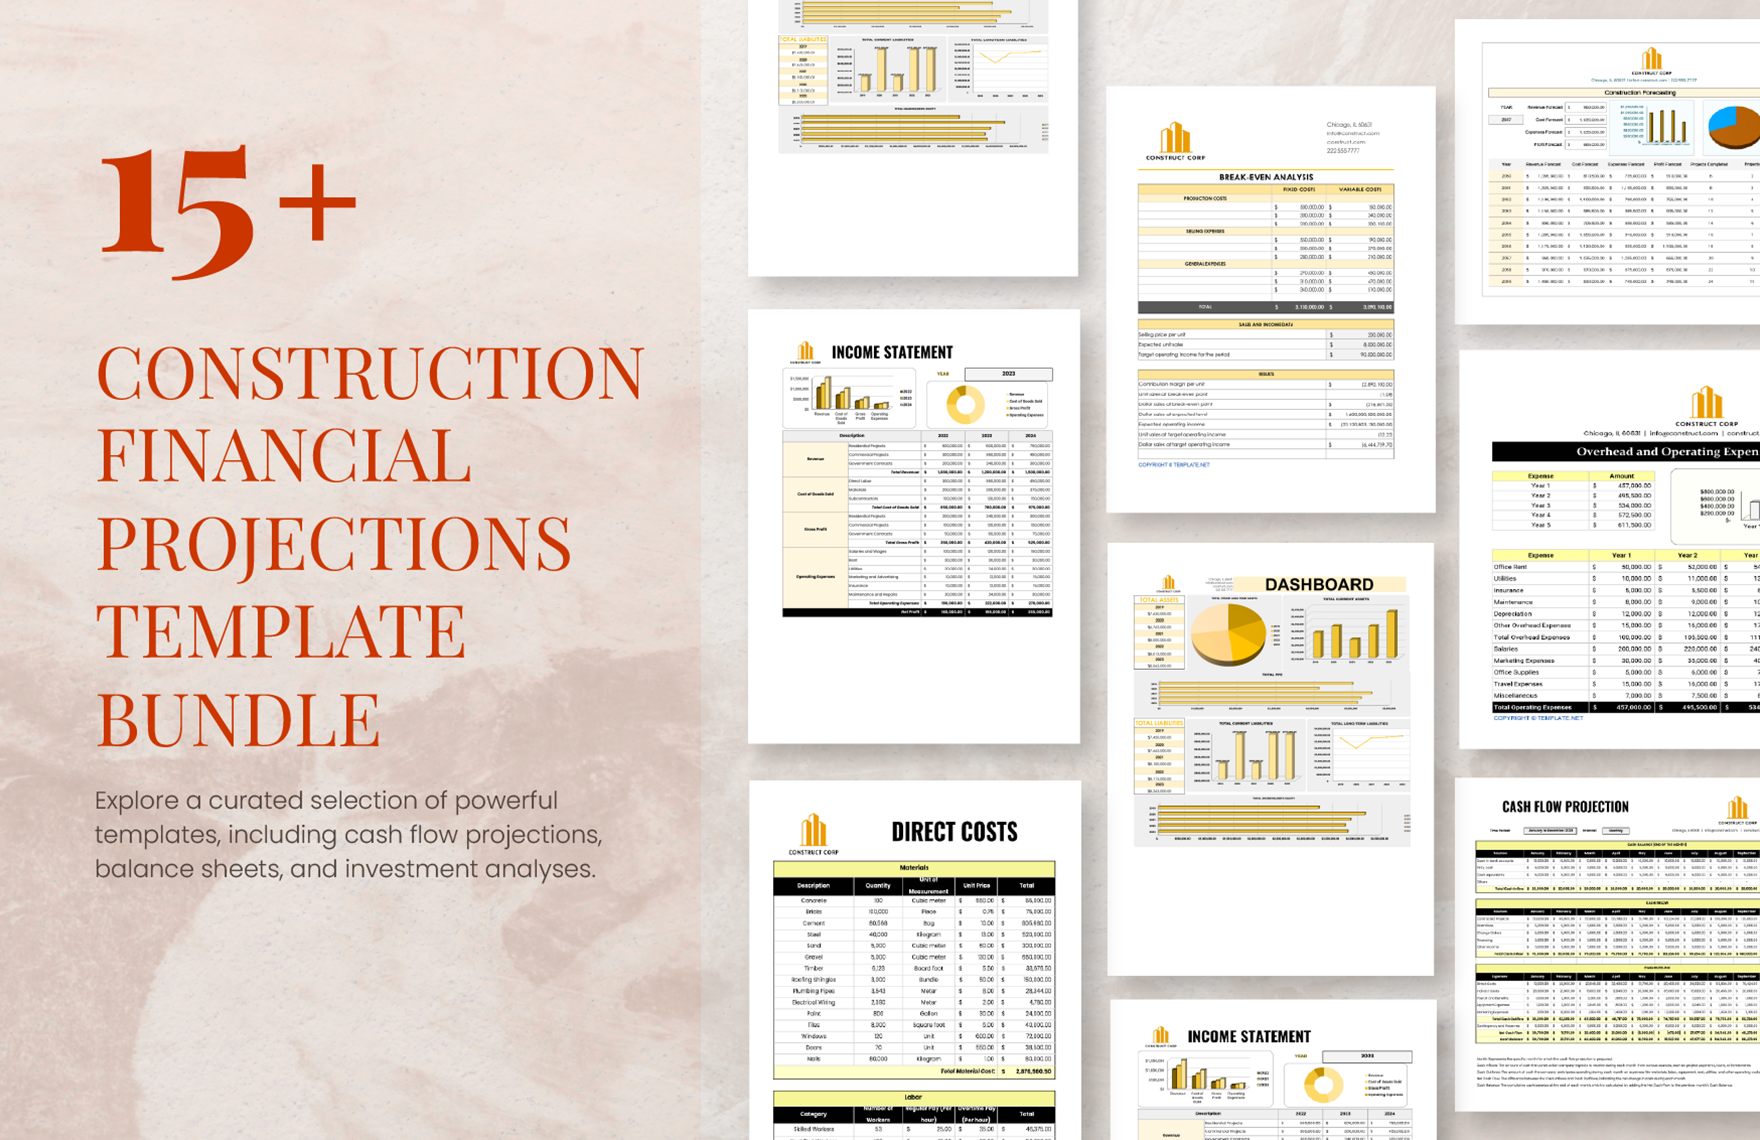 15+ Construction Financial Projections Template Bundle